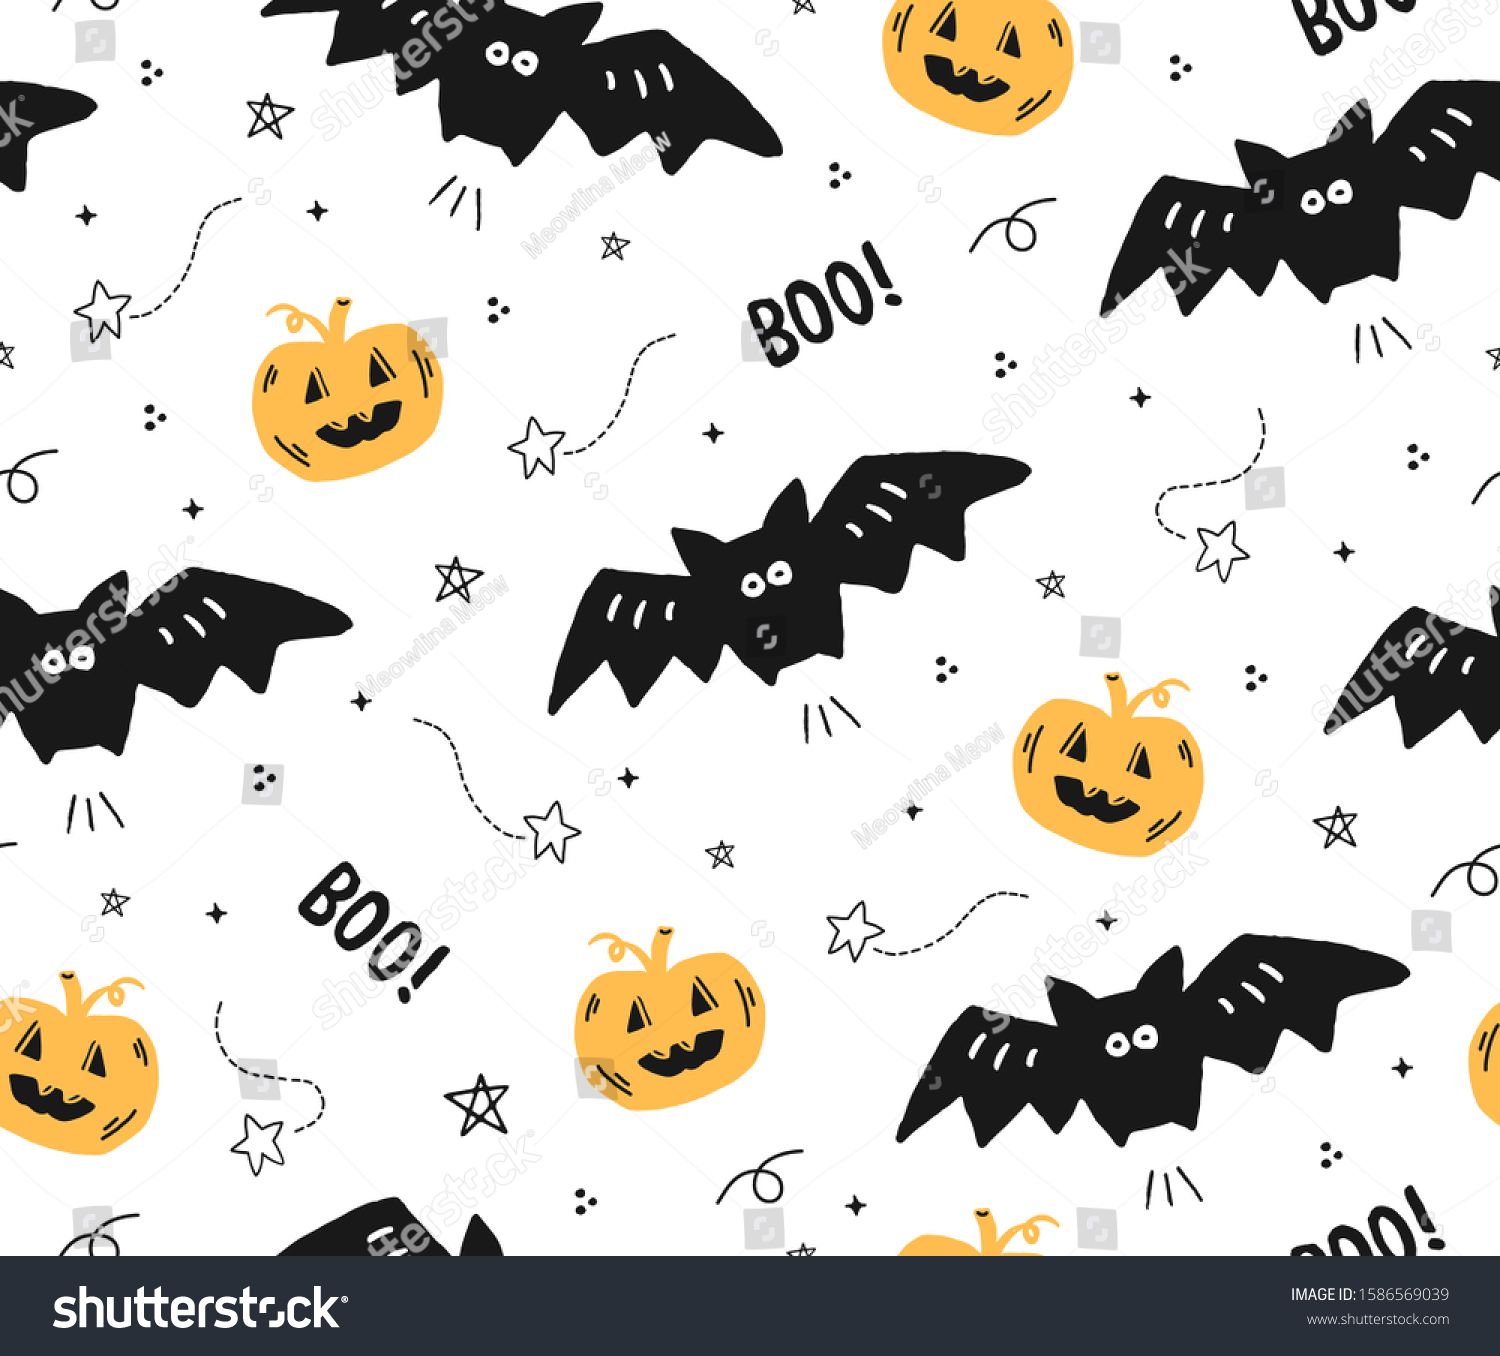 Bat Wallpaper  NawPic